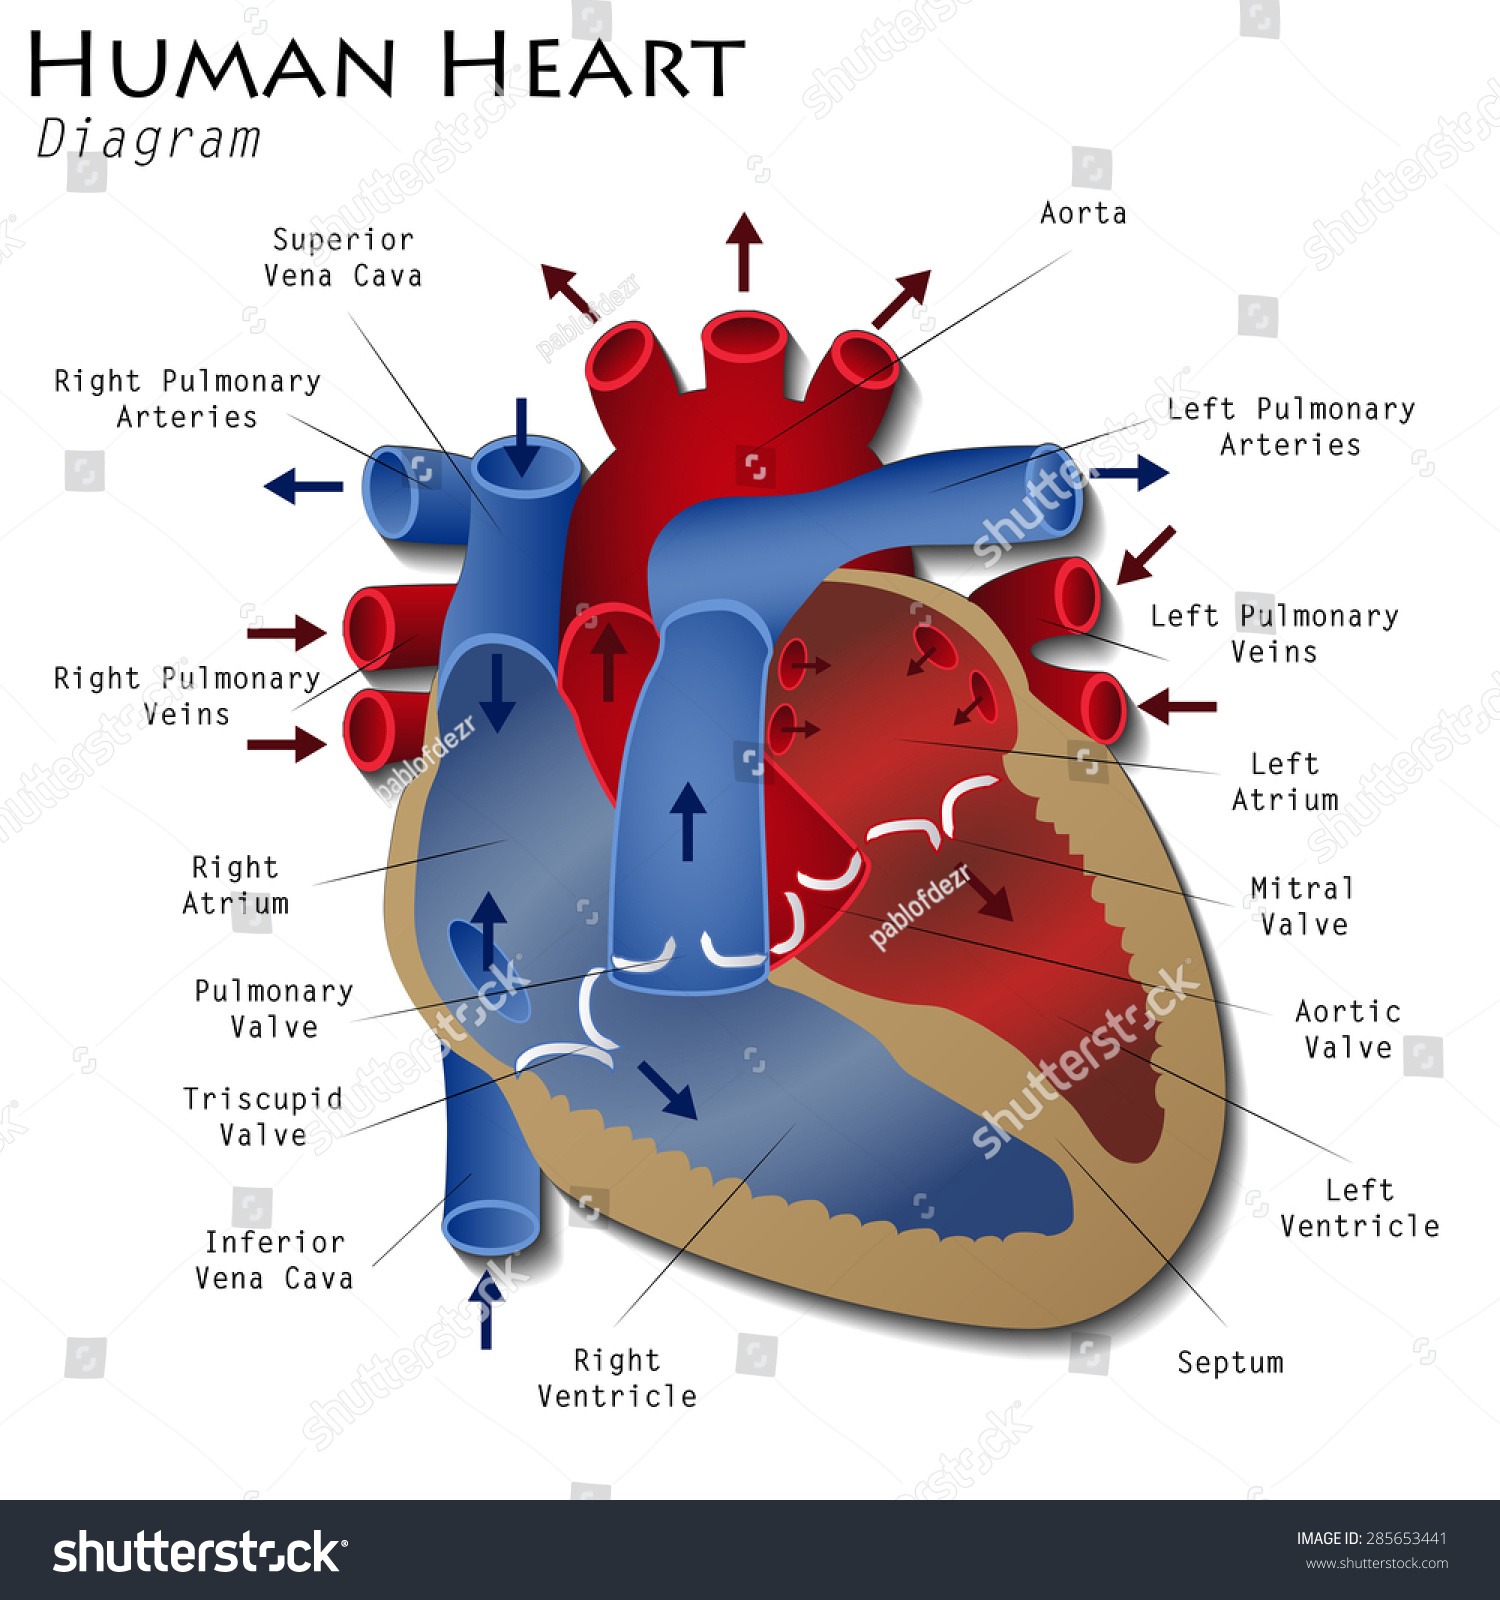 Human Heart Diagram Stock Vector 285653441 - Shutterstock